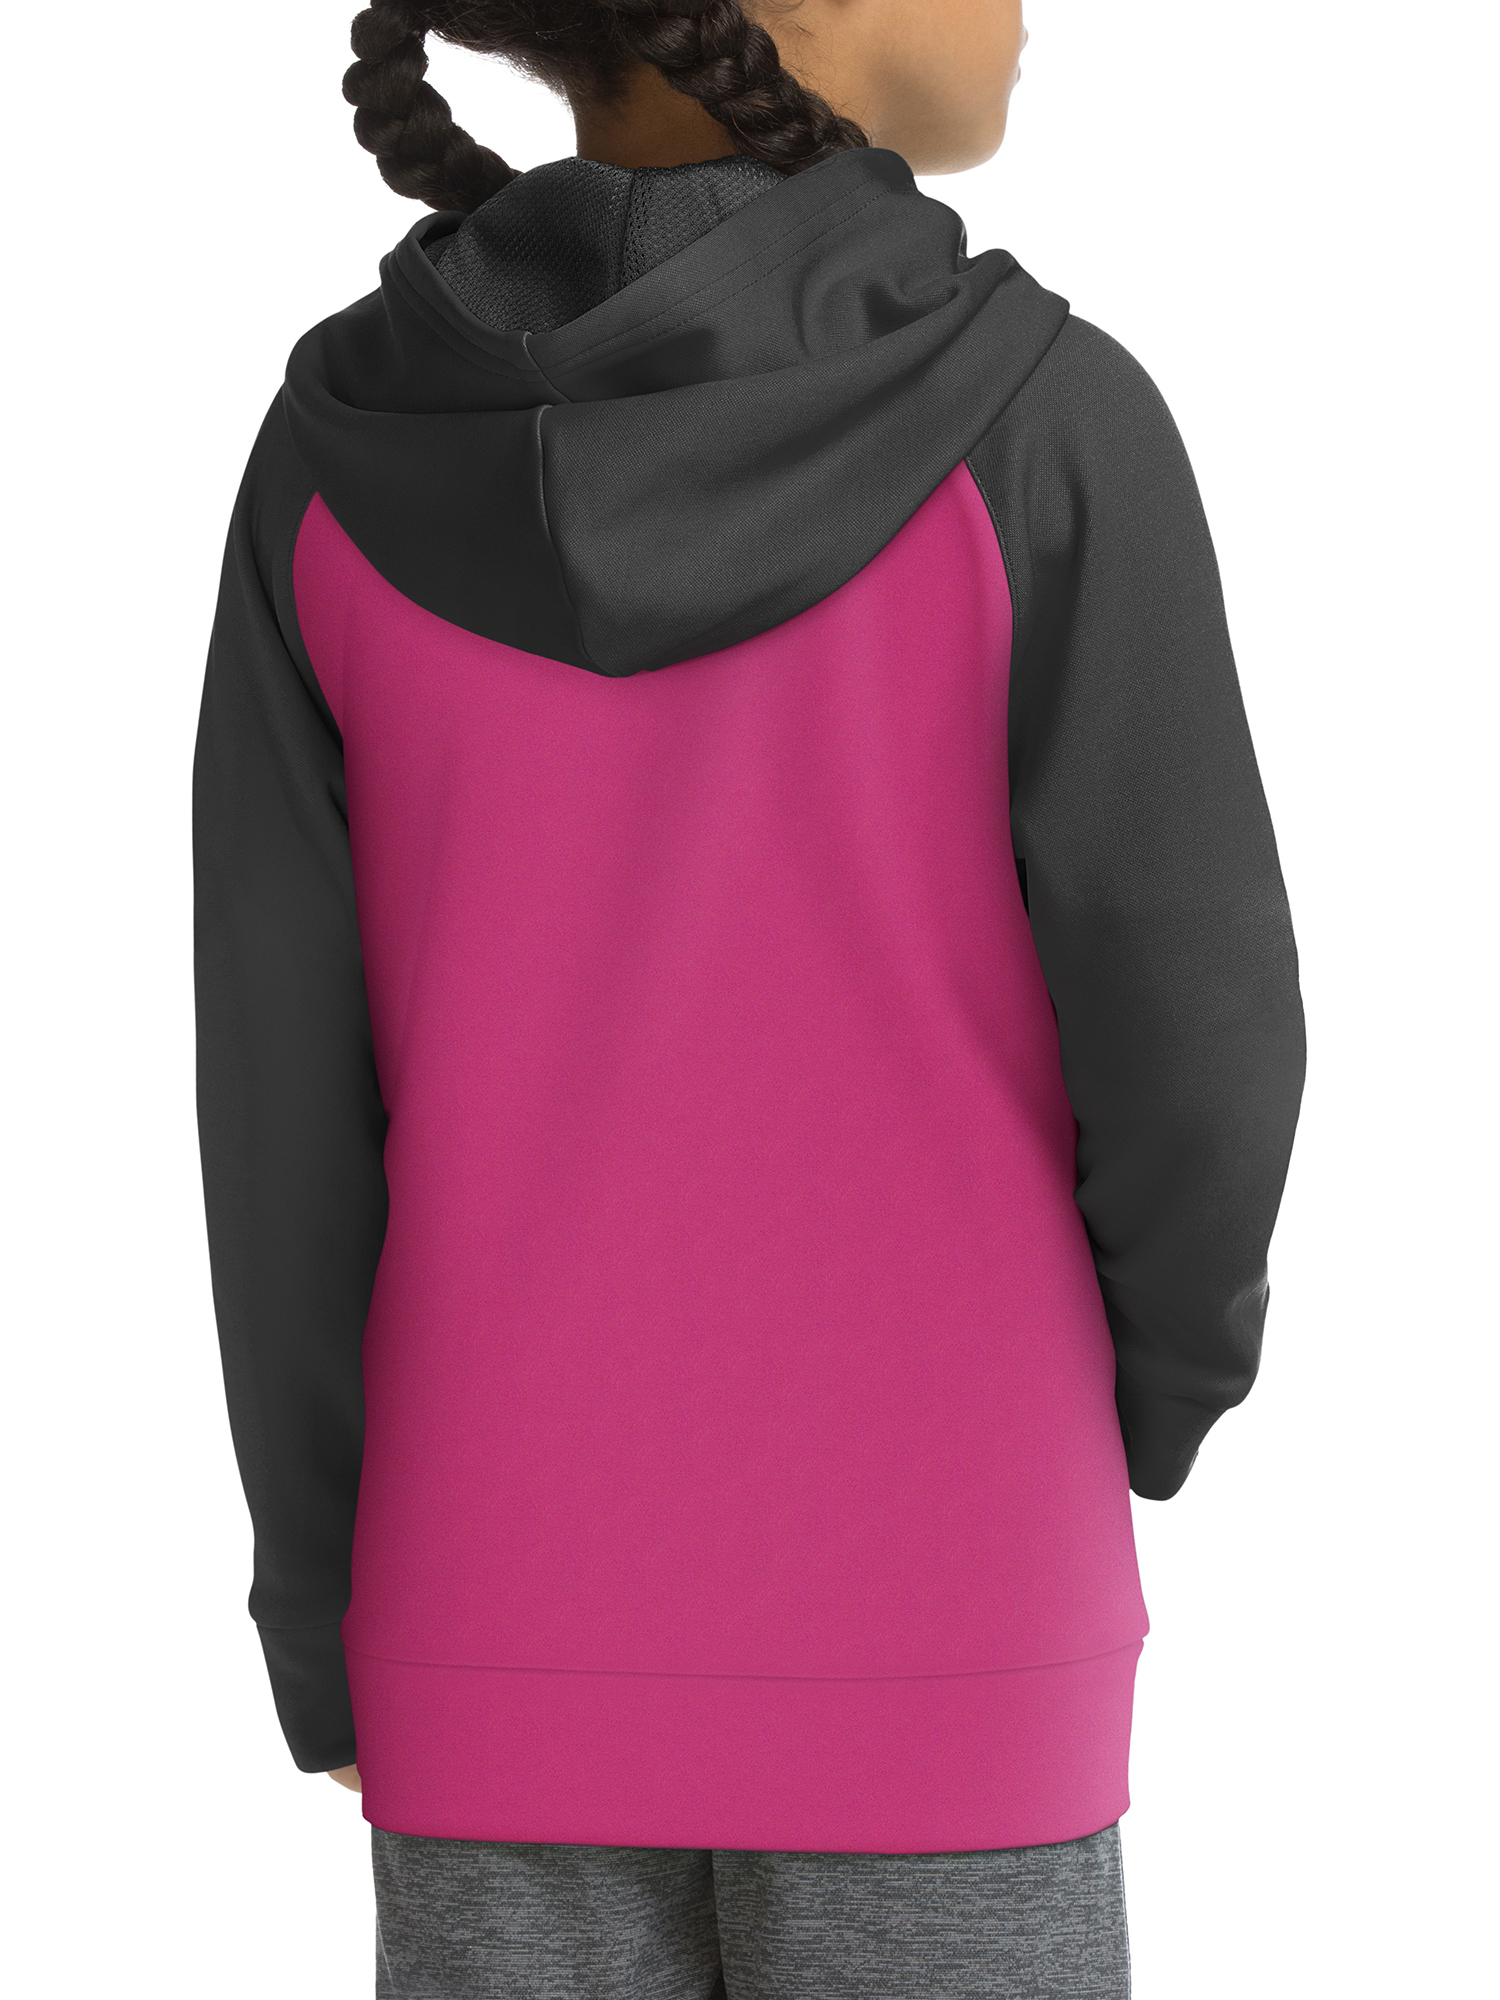 Hanes Sport Tech Fleece Full Zip Hooded Jacket (Little Girls & Big Girls) - image 2 of 3